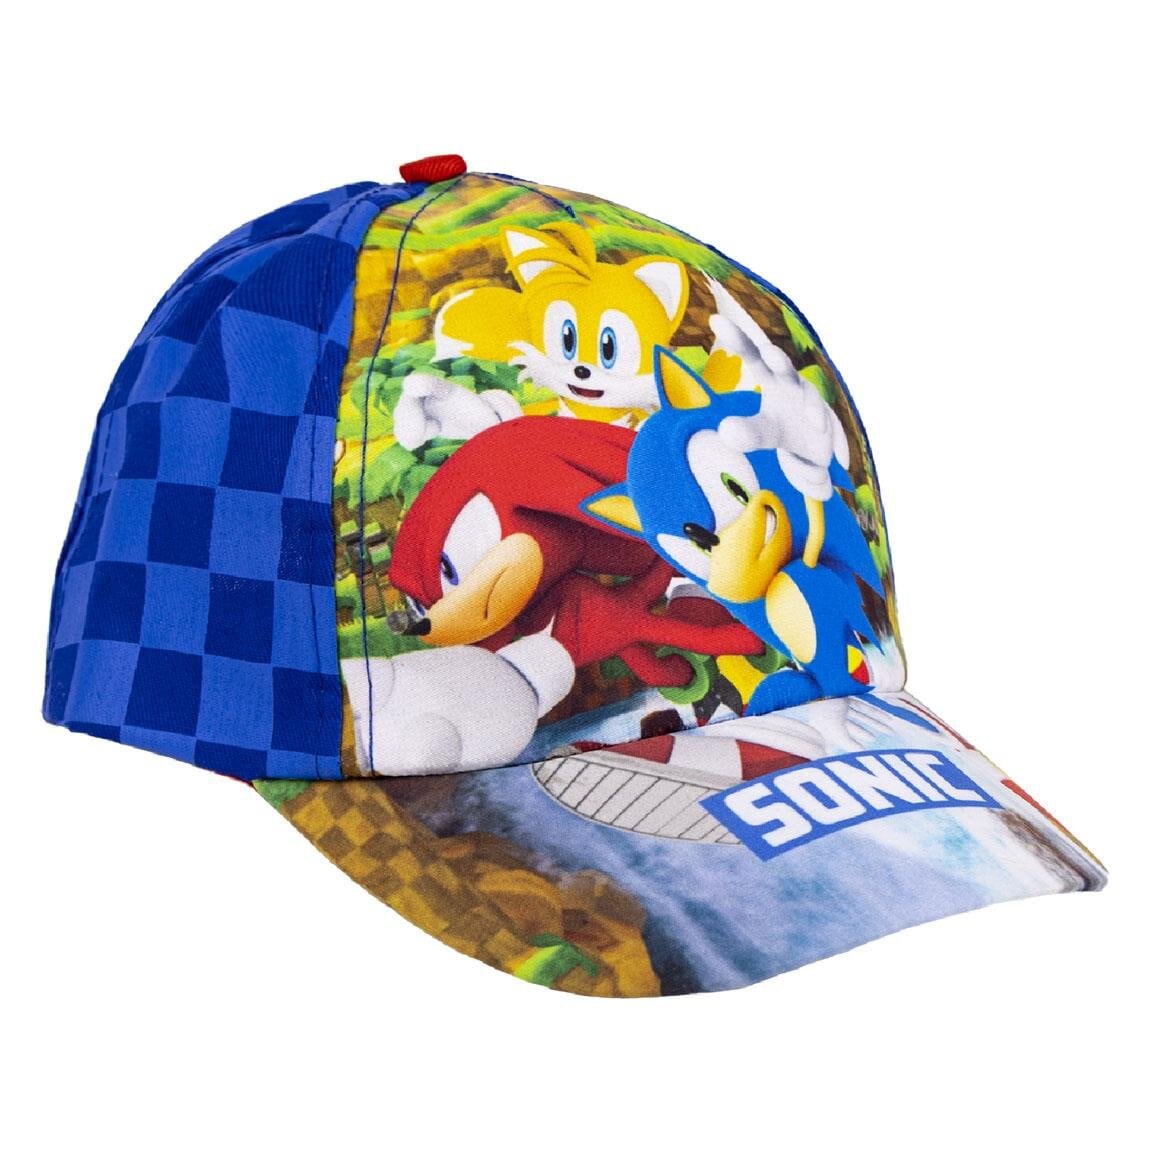 Sonic the Hedgehog - Kinderpet